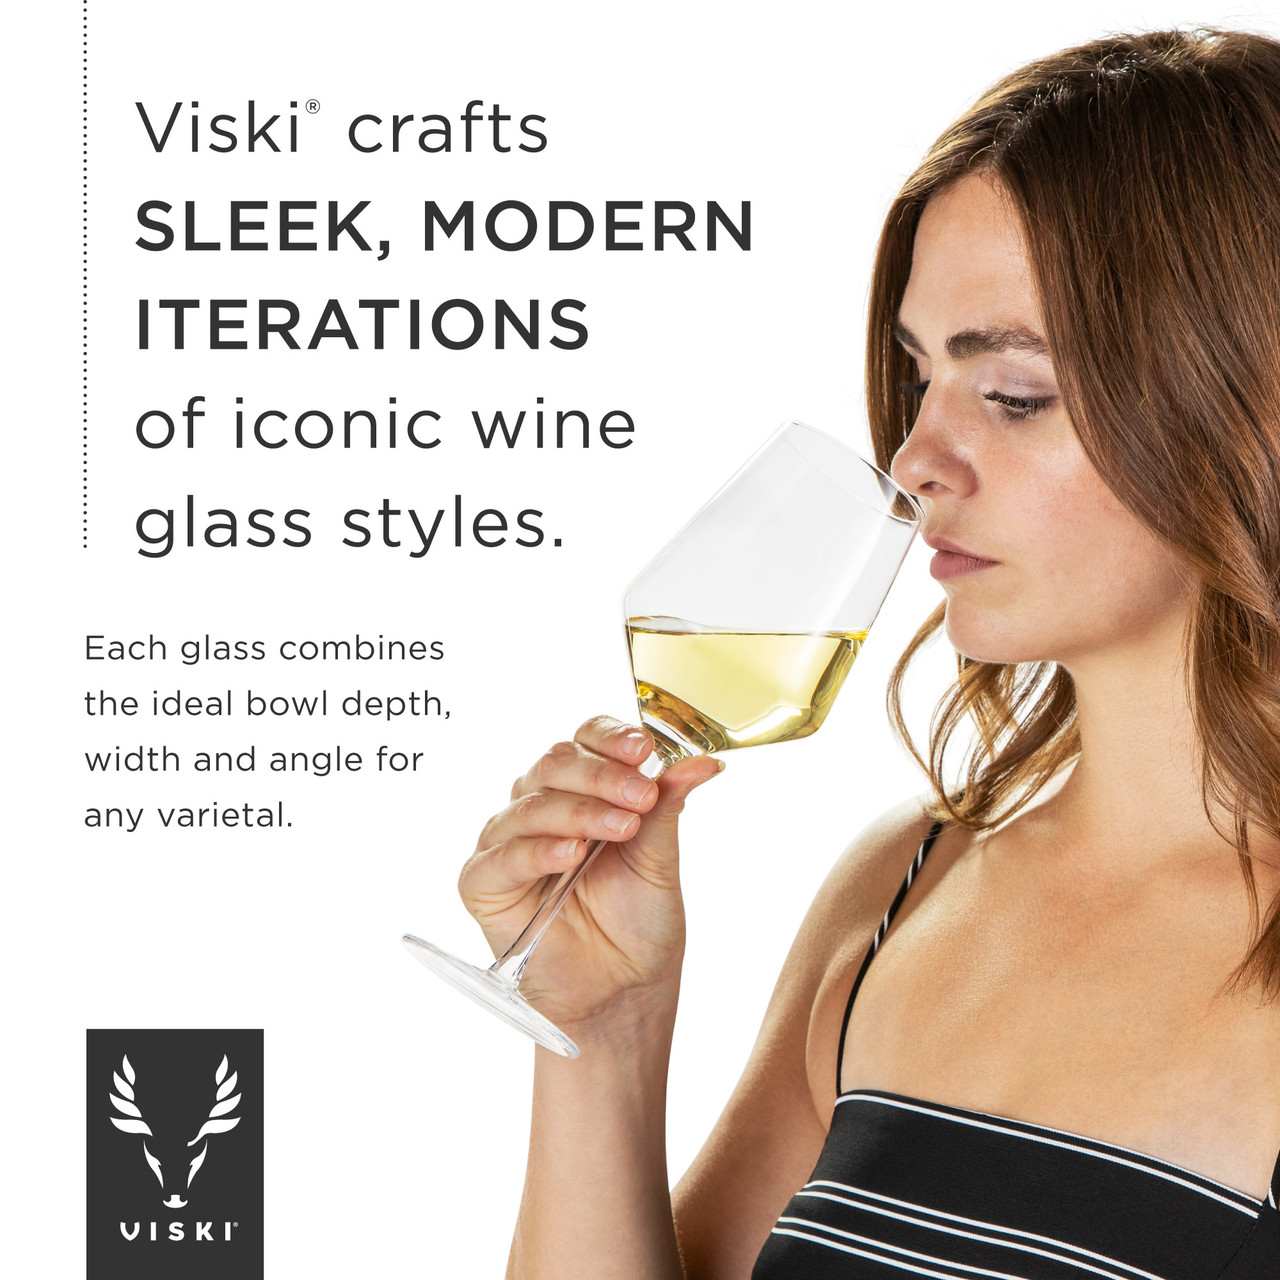 Faceted Crystal Stemless Champagne Flutes by Viski®